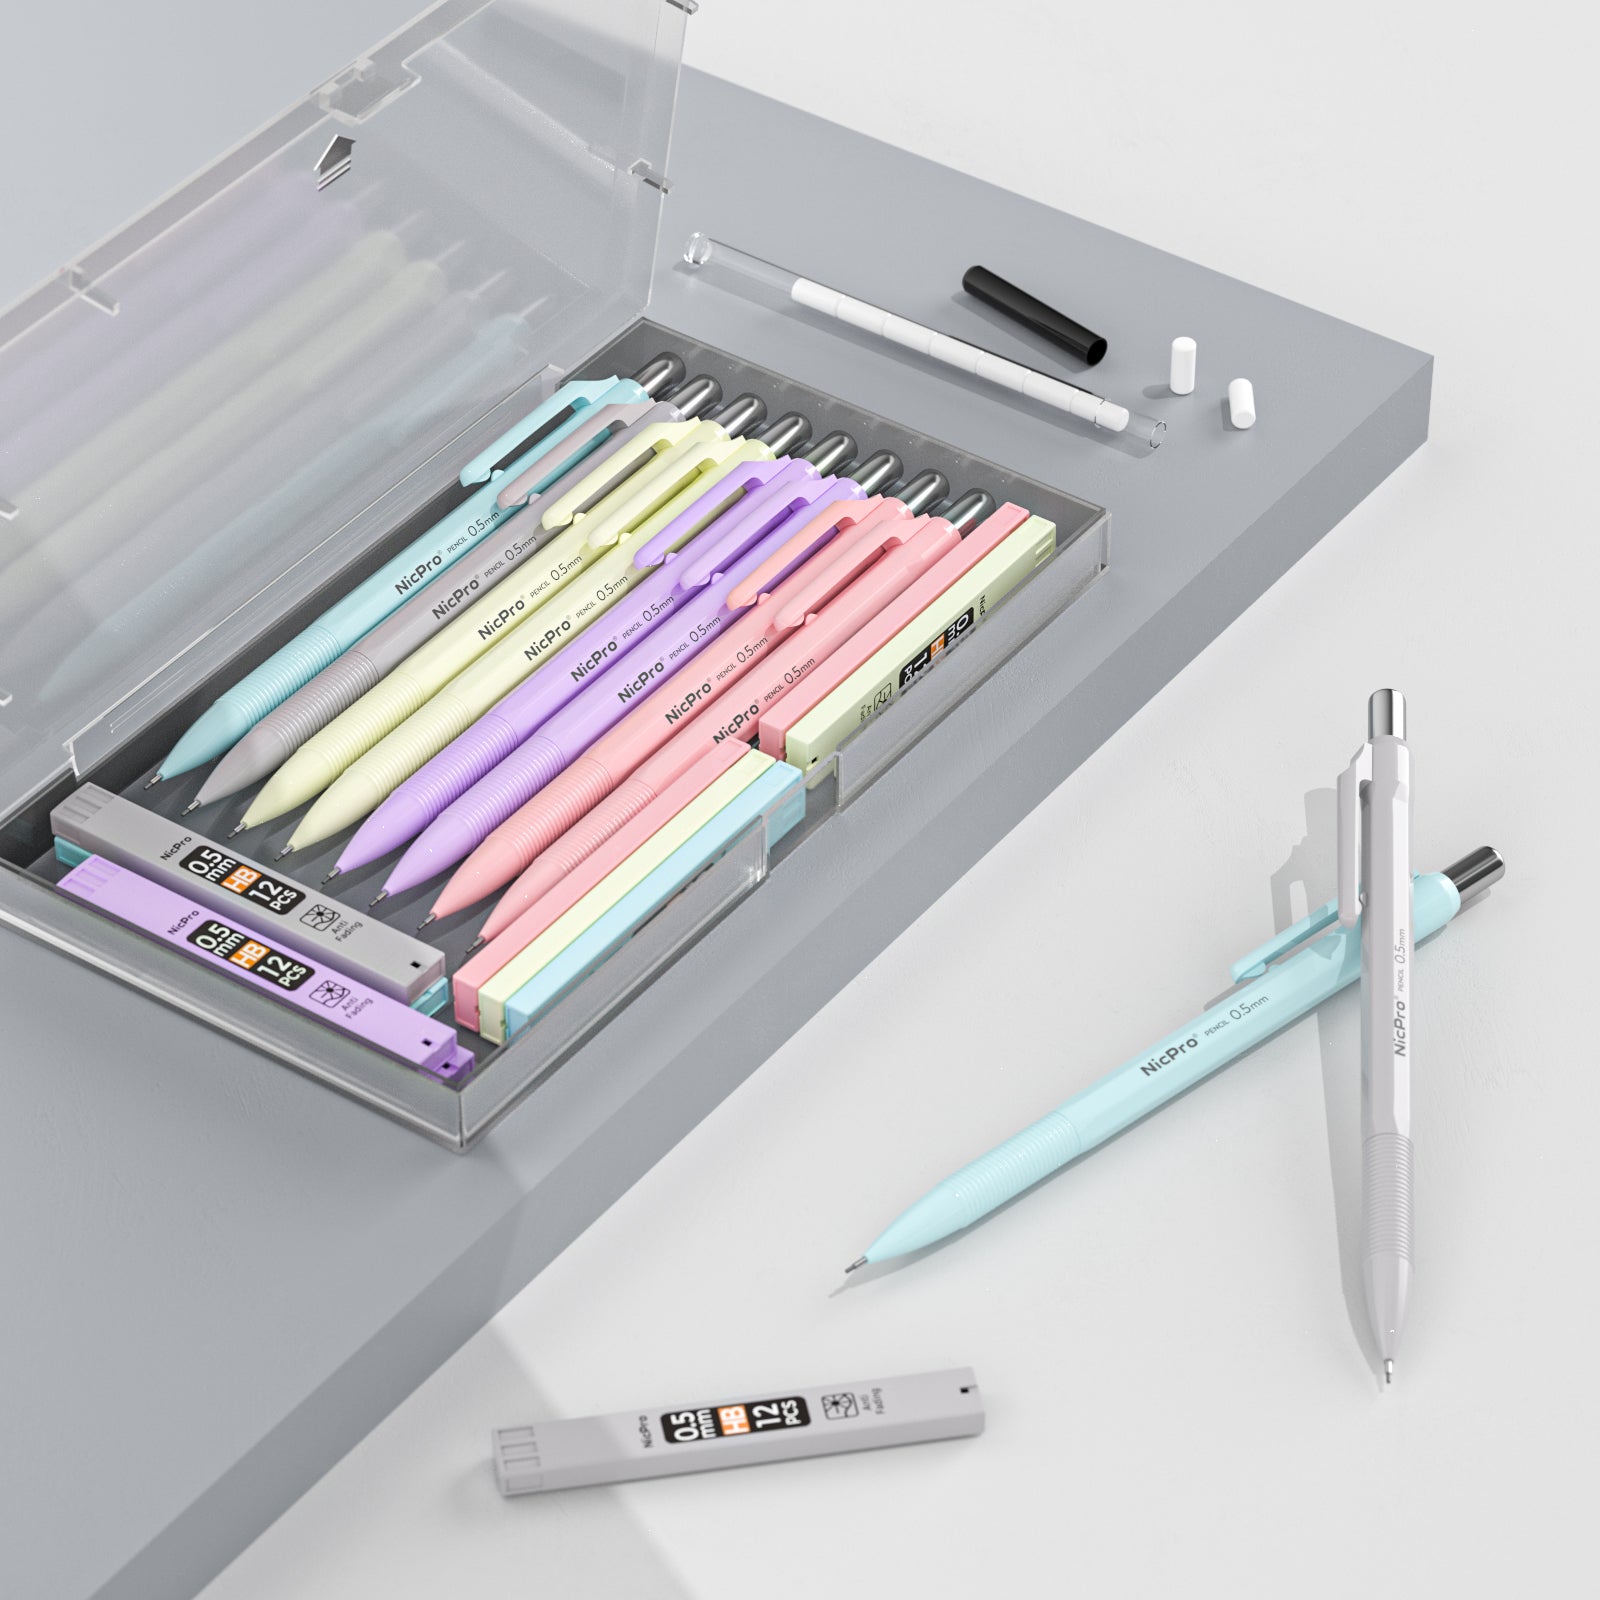 Nicpro 10 PCS 0.5 mm Mechanical Pencils Set with Case, Pastel Aestheti